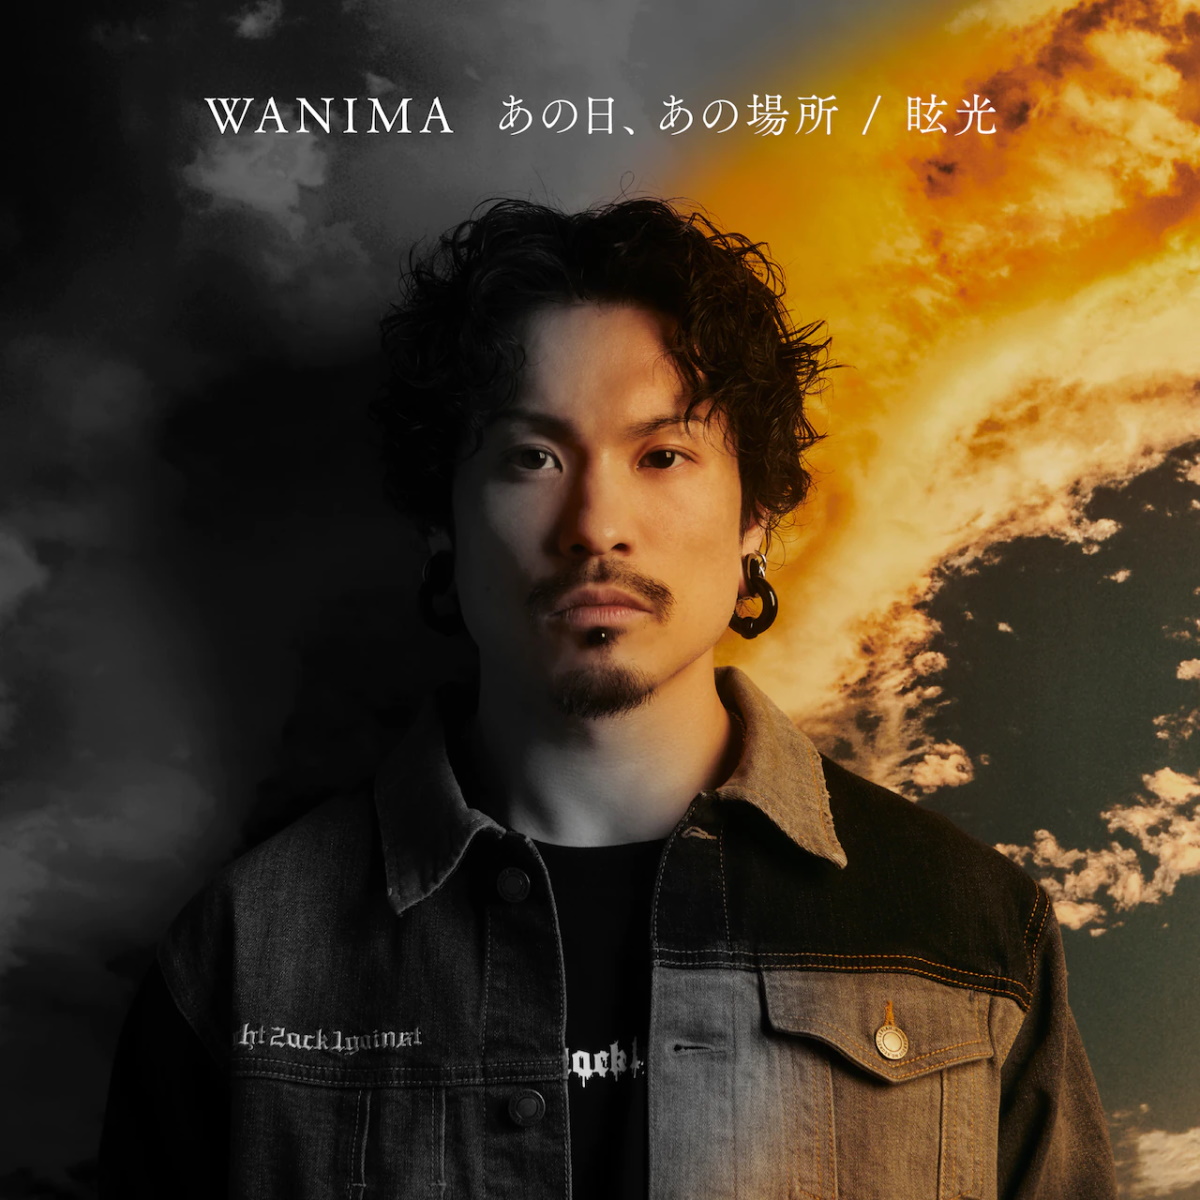 Cover art for『WANIMA - 眩光』from the release『Ano Hi, Ano Basho / Genkou